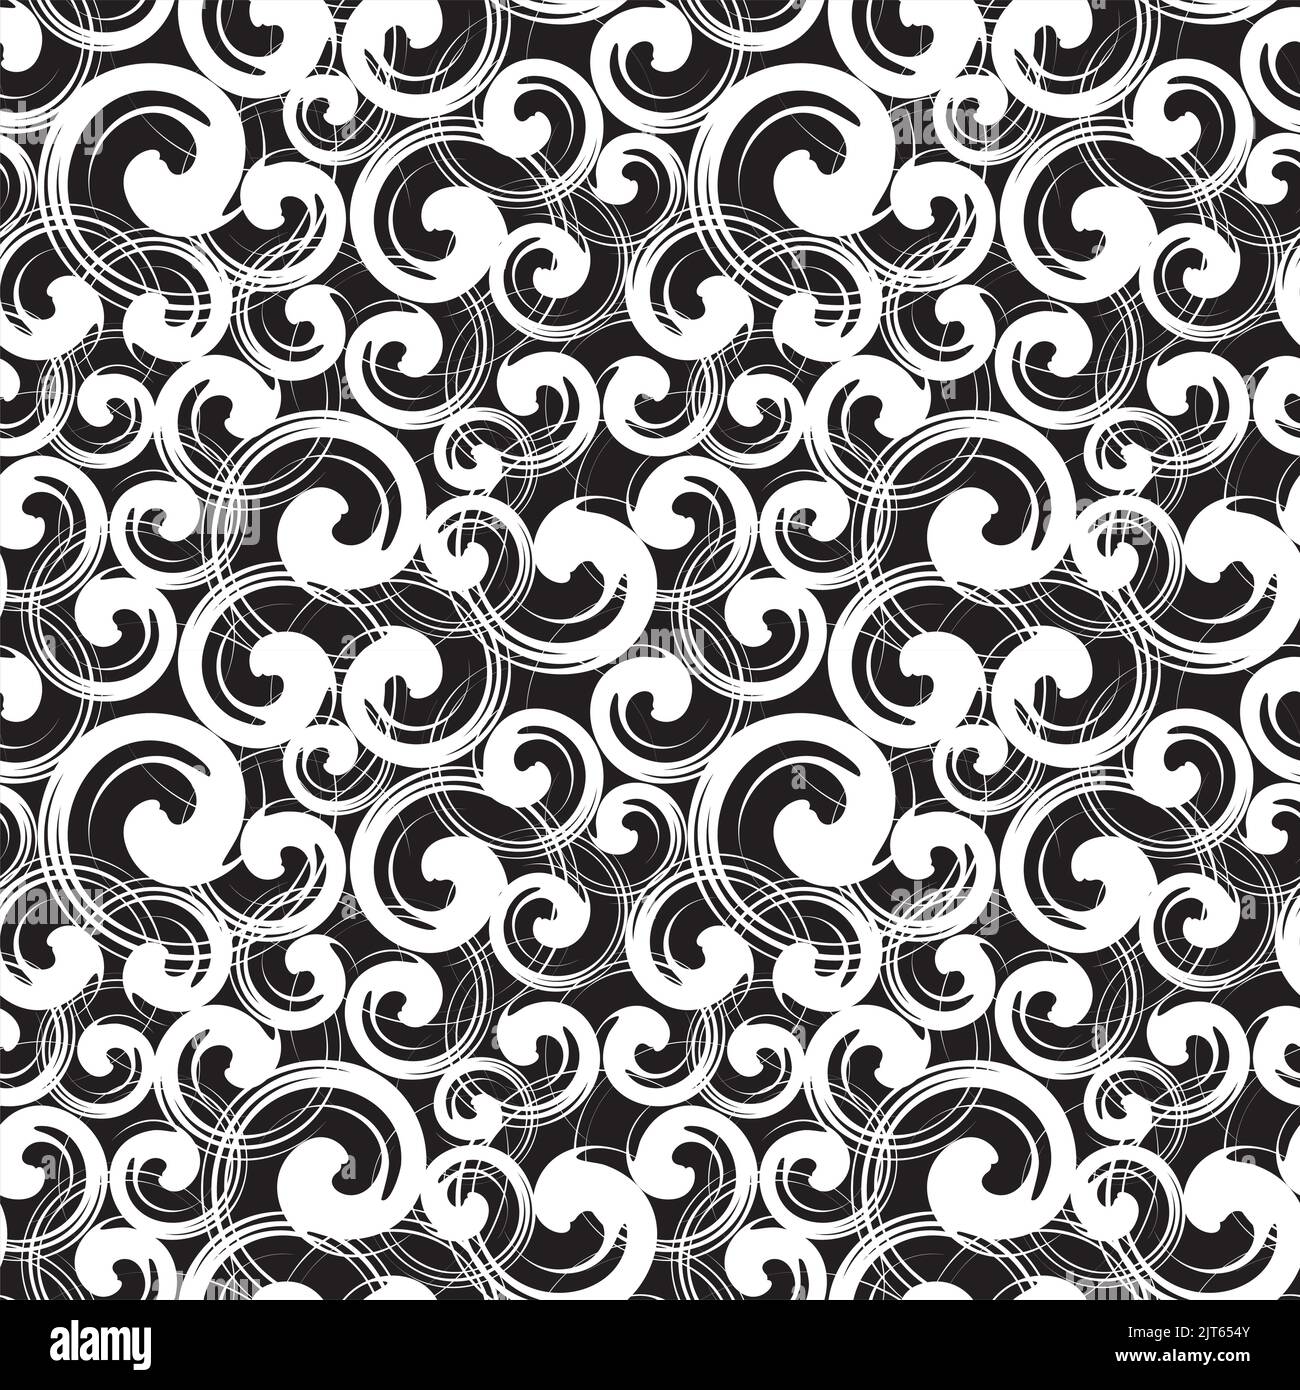 Spiral symbols seamless pattern. Different sizes white swirls randomly ...